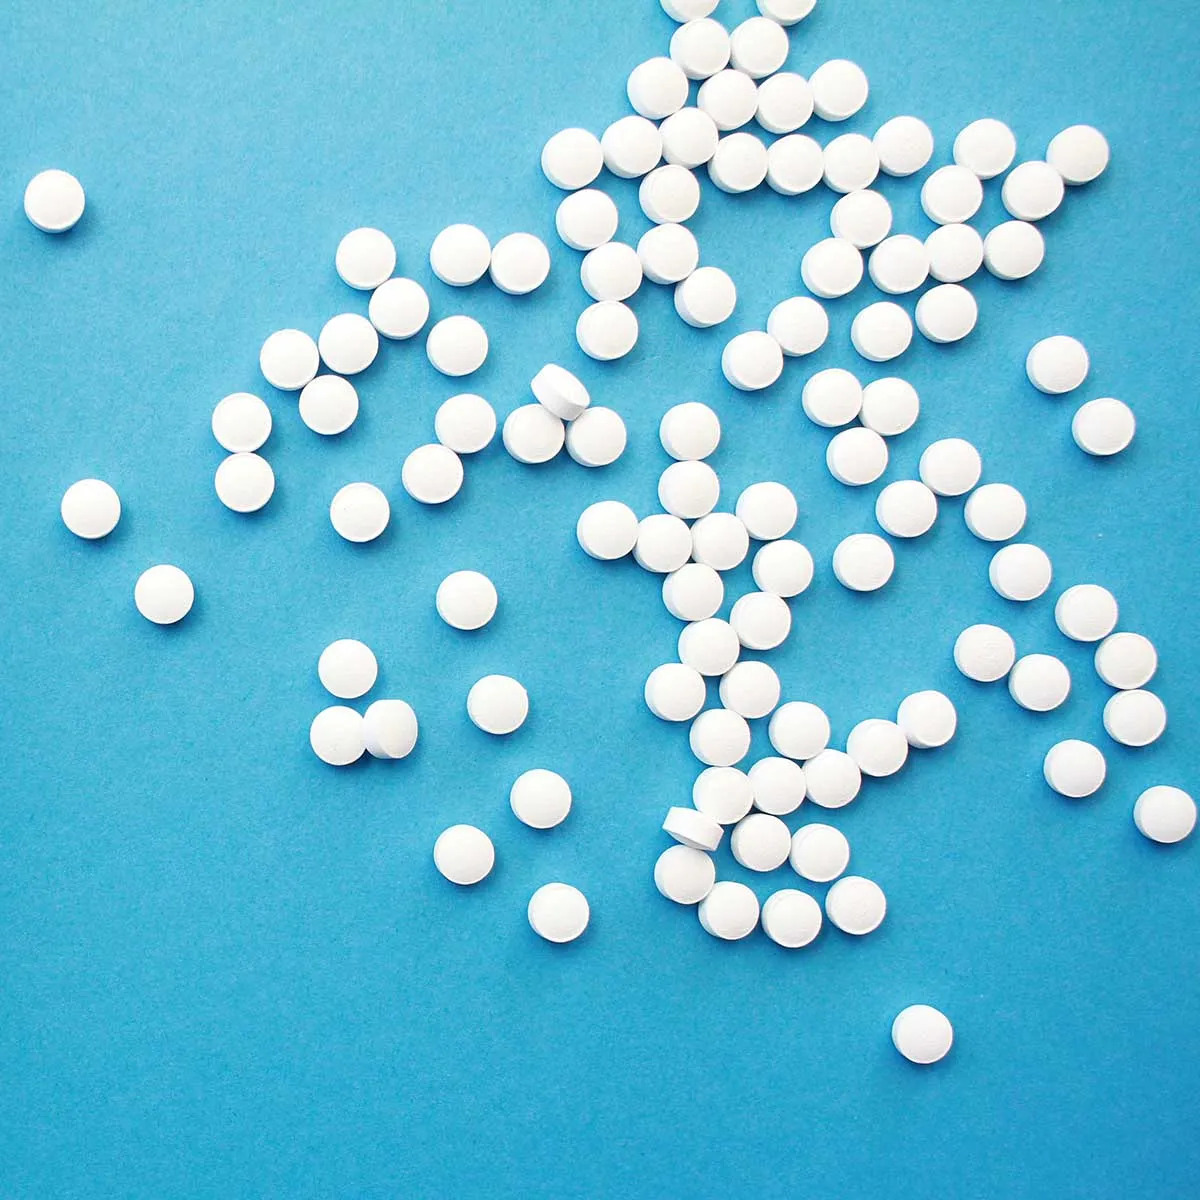 Bestocef 100 mg Tablets | Cefixime Tablets